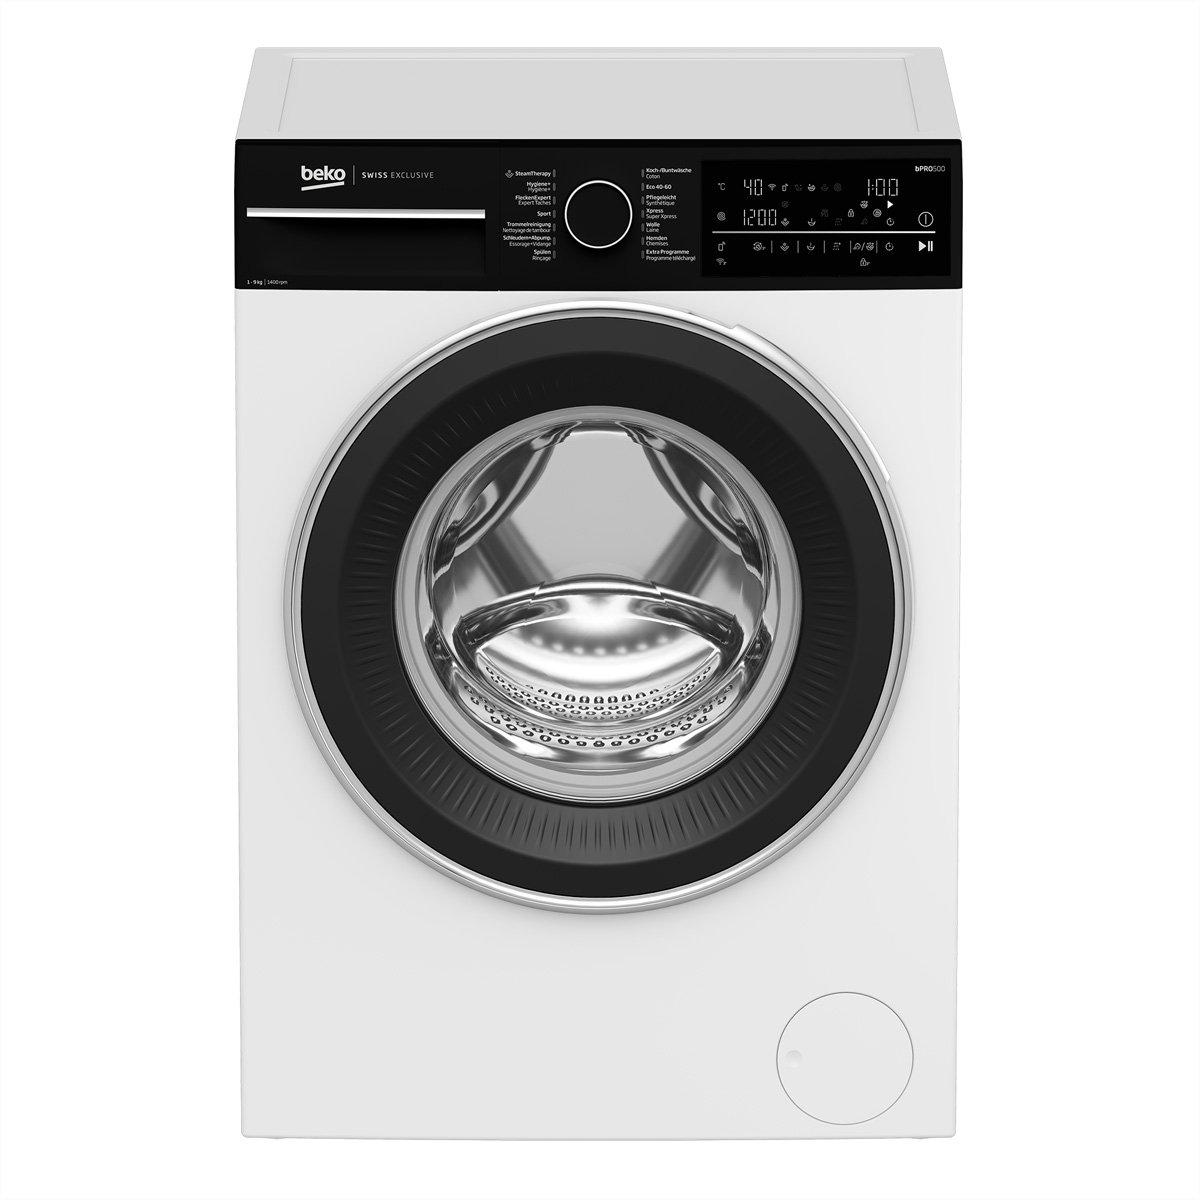 Beko Waschmaschine WM340 9kg, A, weiss Waschmaschine WM340 9kg, A, weiss